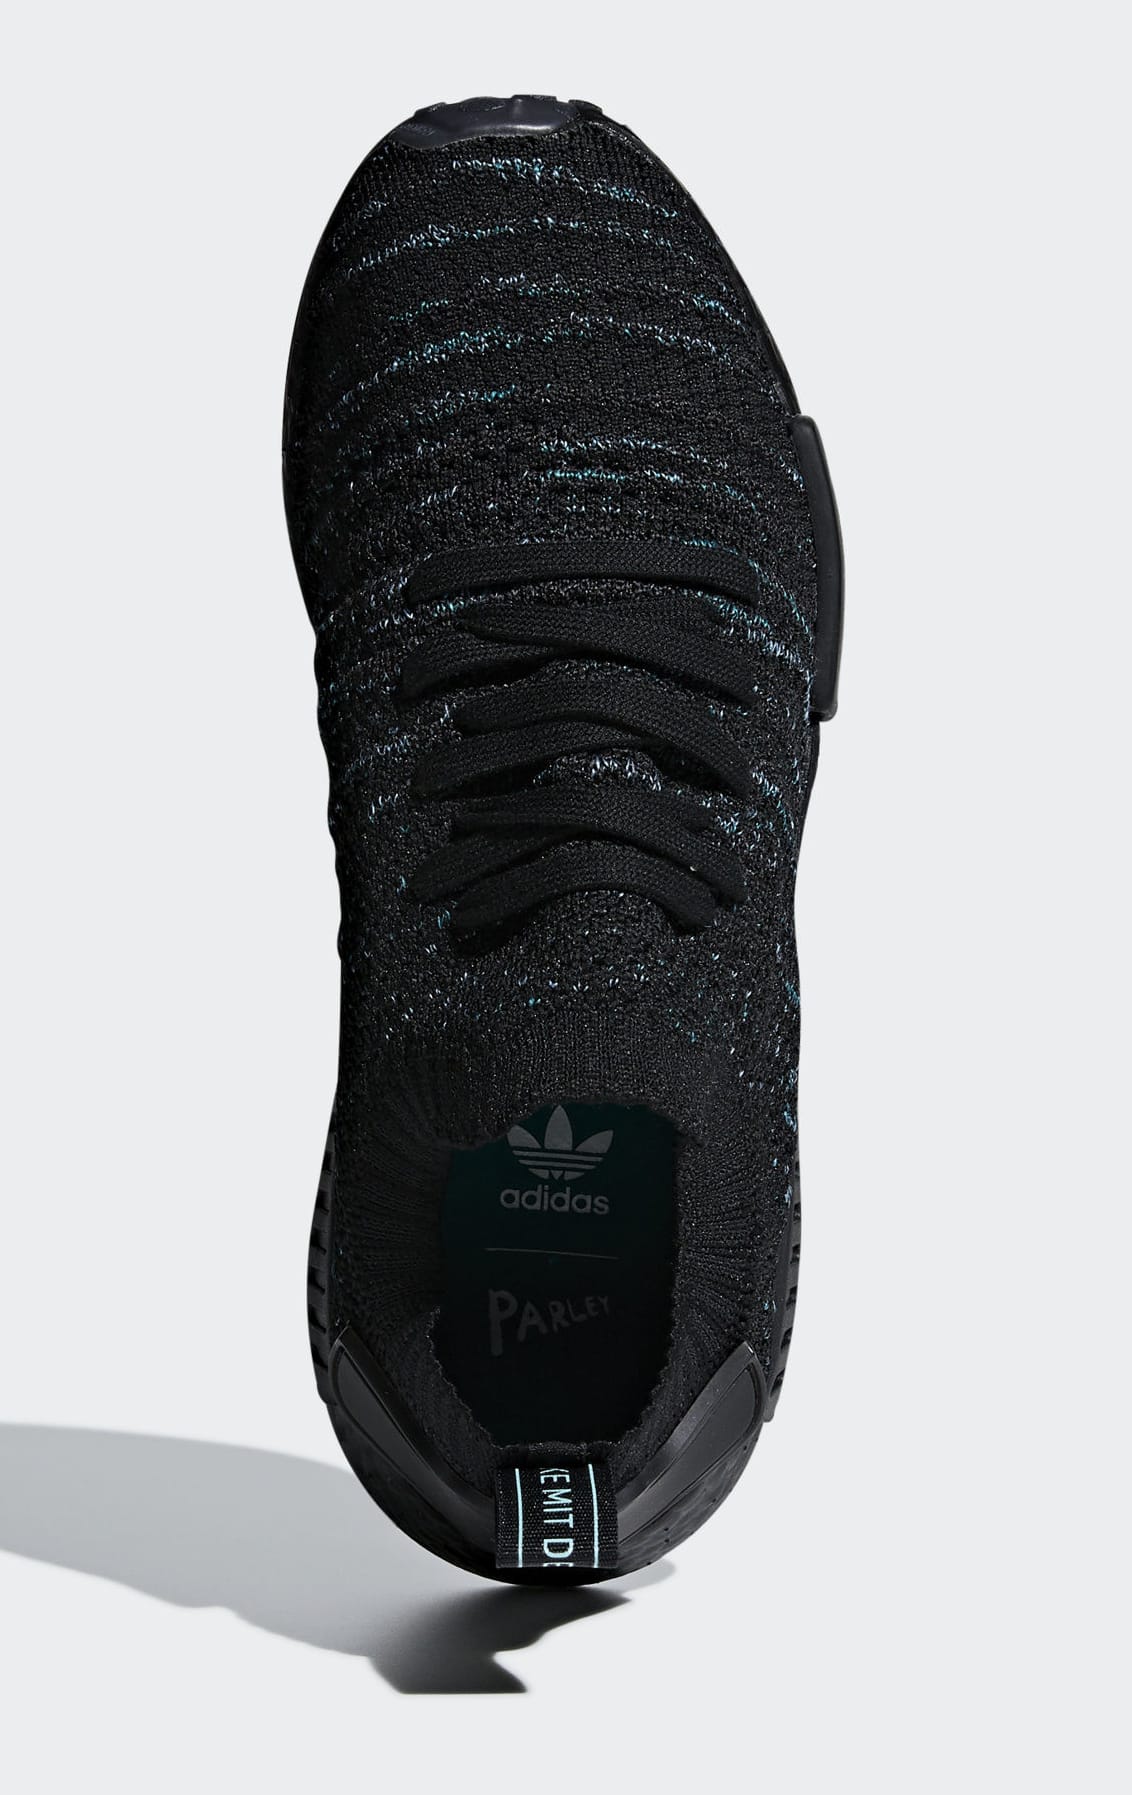 parley-adidas-nmd-r1-core-black-blue-spirit-aq0943-top